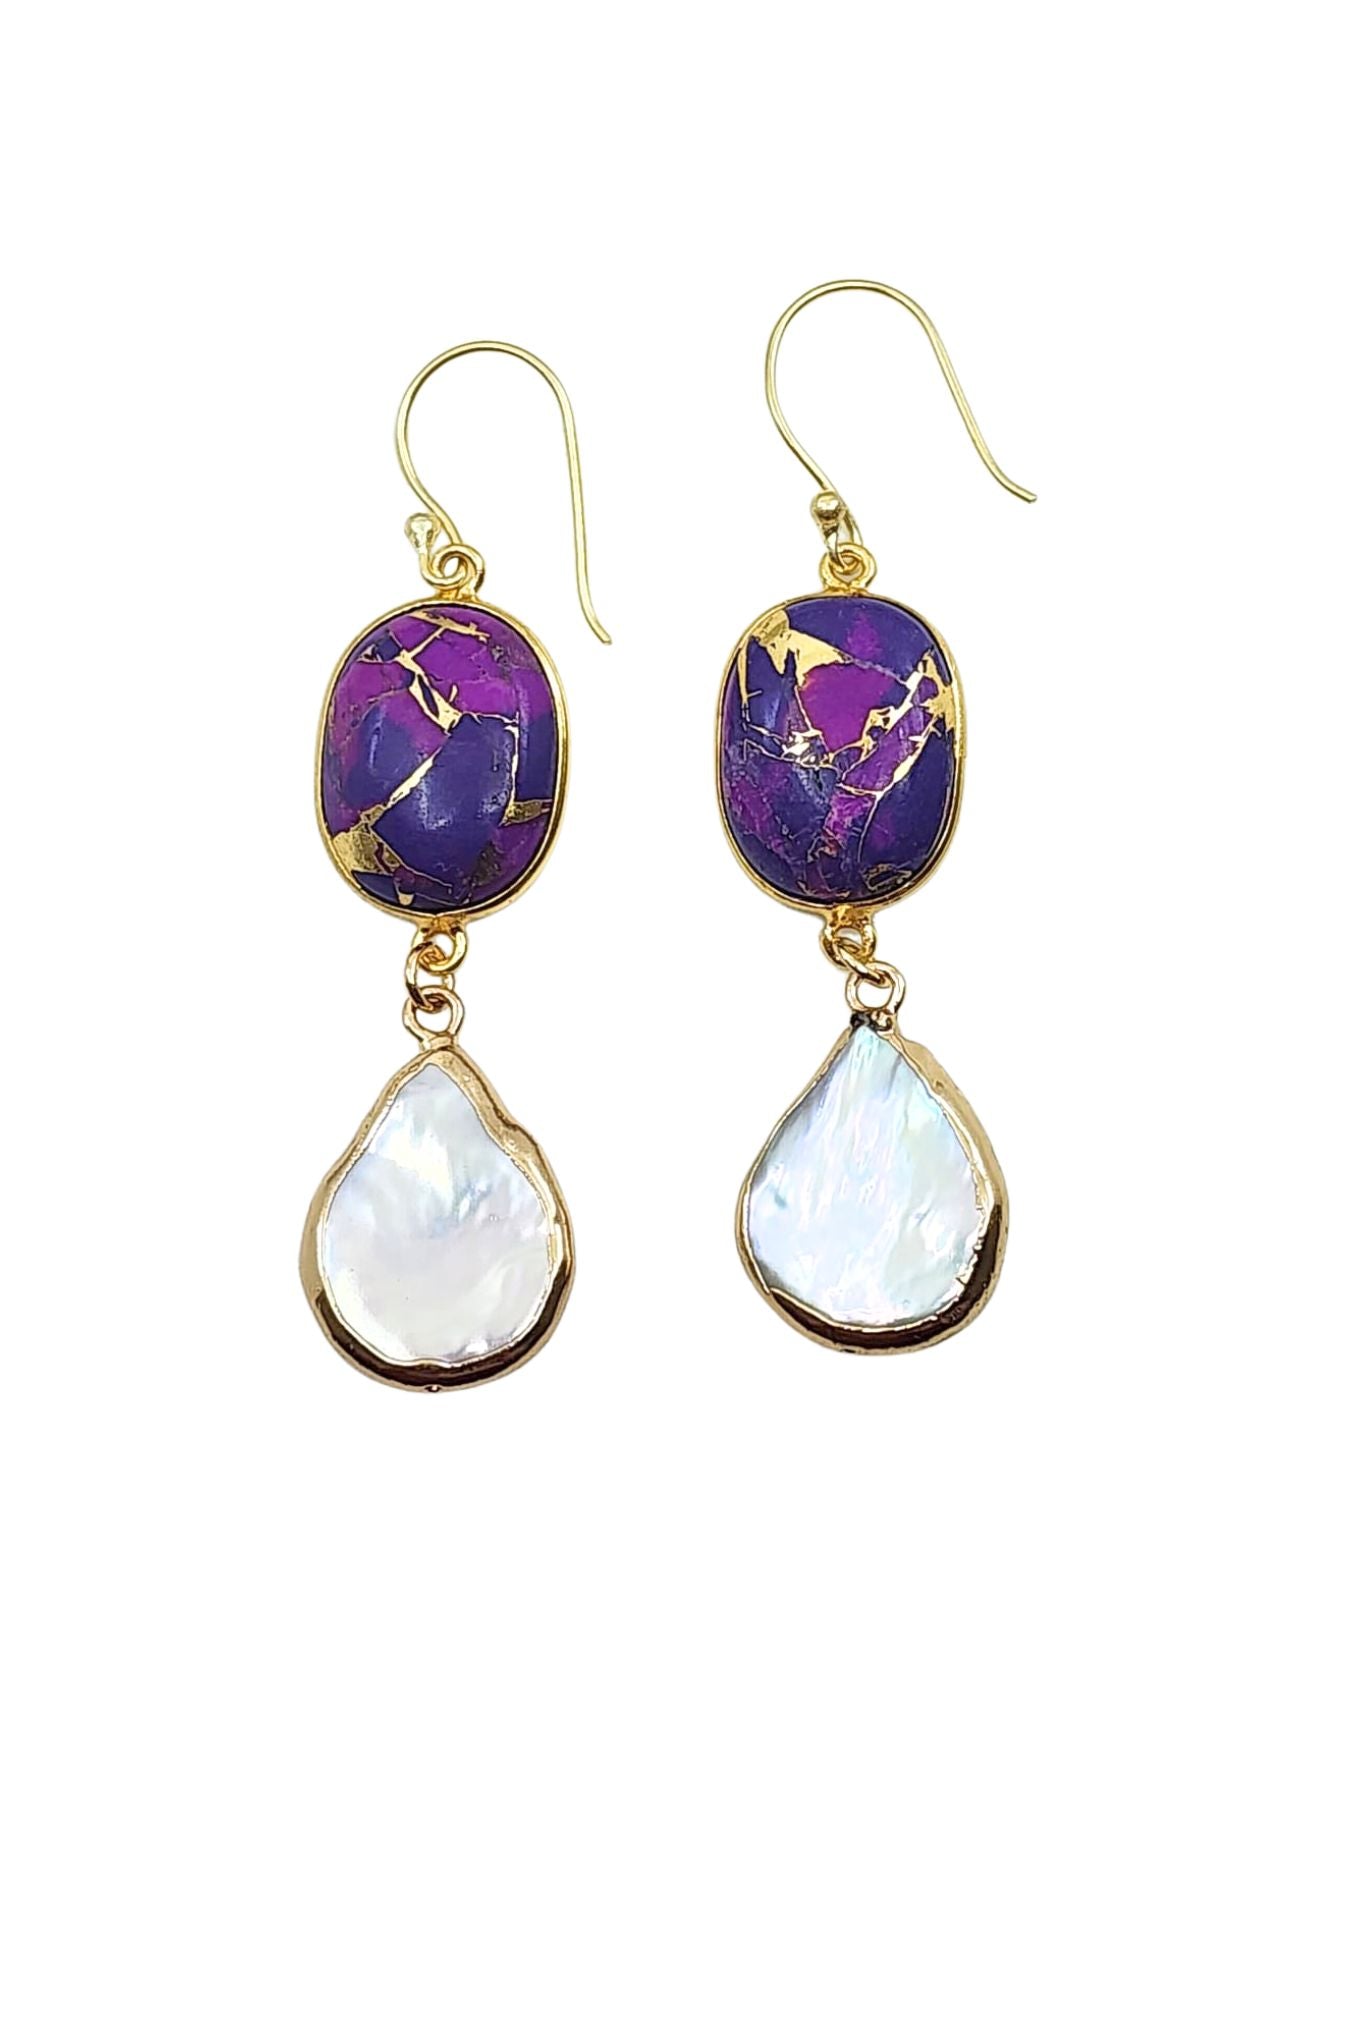 Rome Earrings in Purple Mojave and Pearl